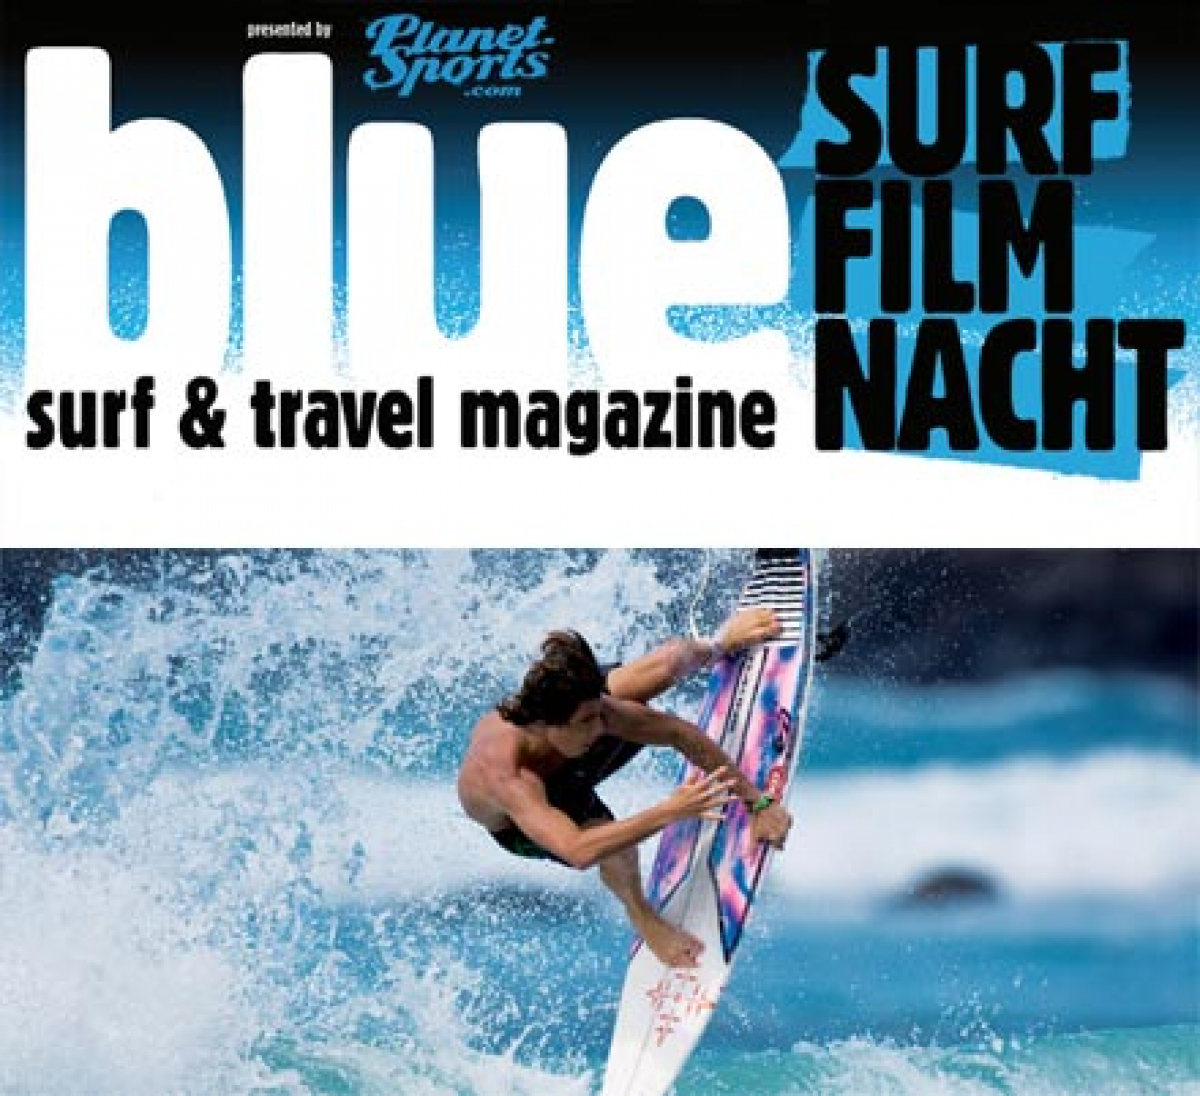 Surf Filme im Kino - Blue Surf Film Nacht